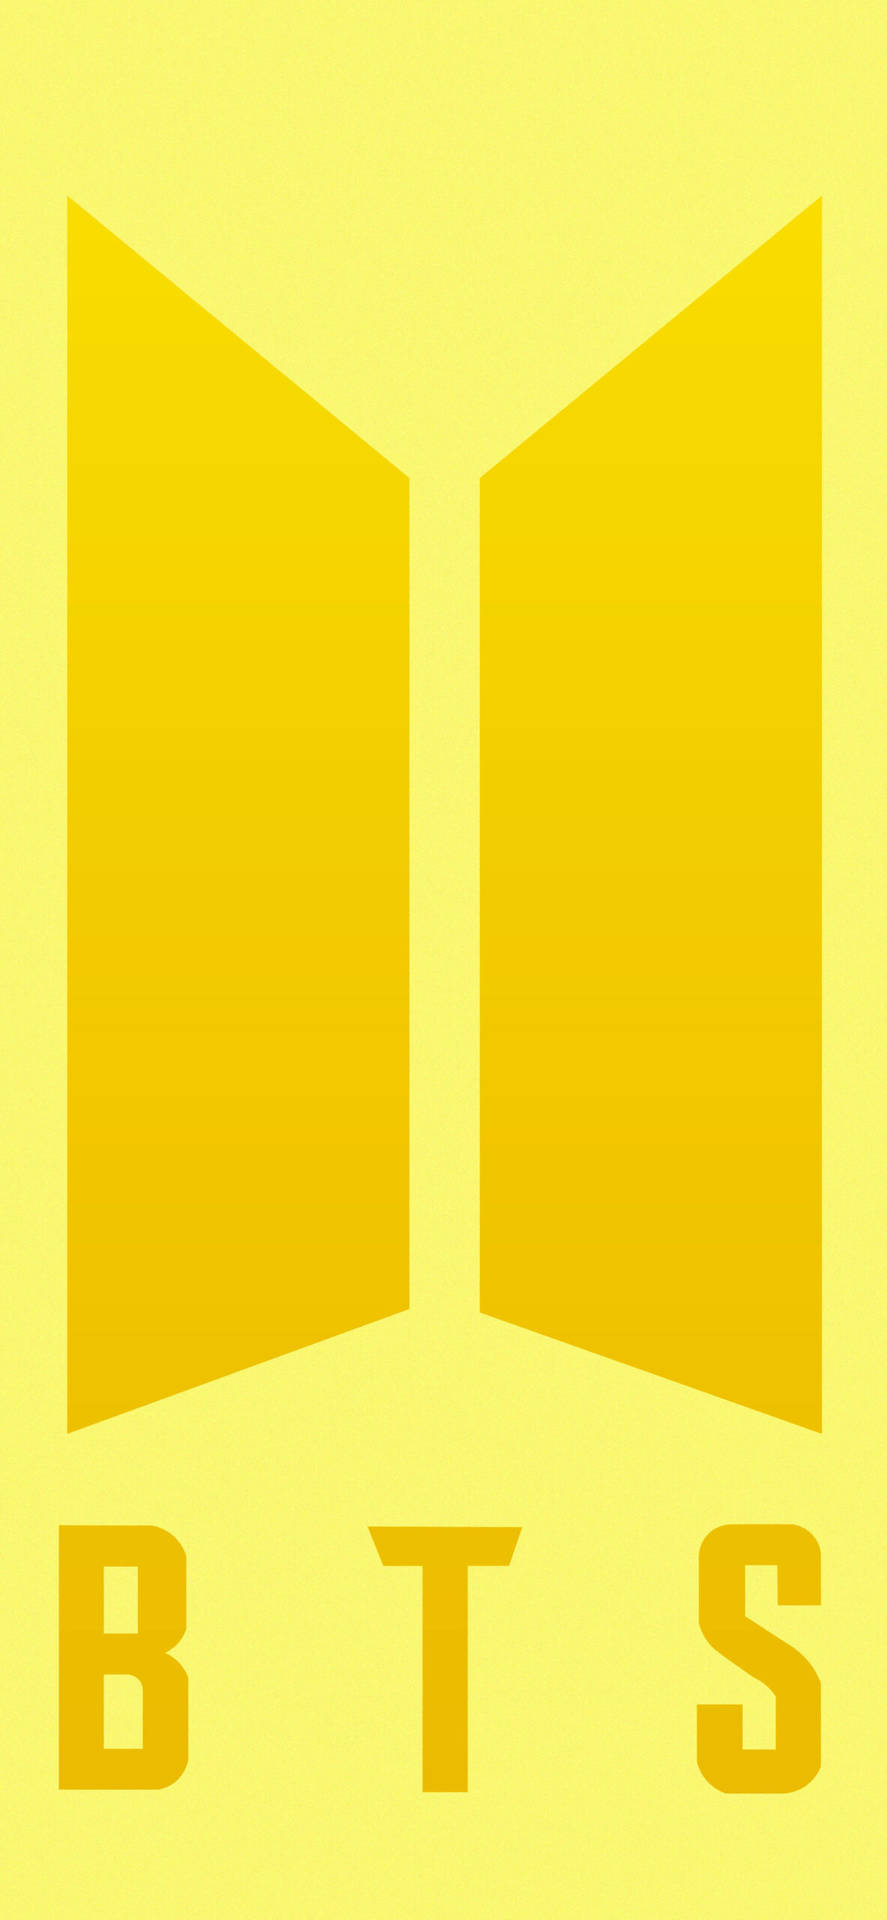 Bts Logo In Yellow